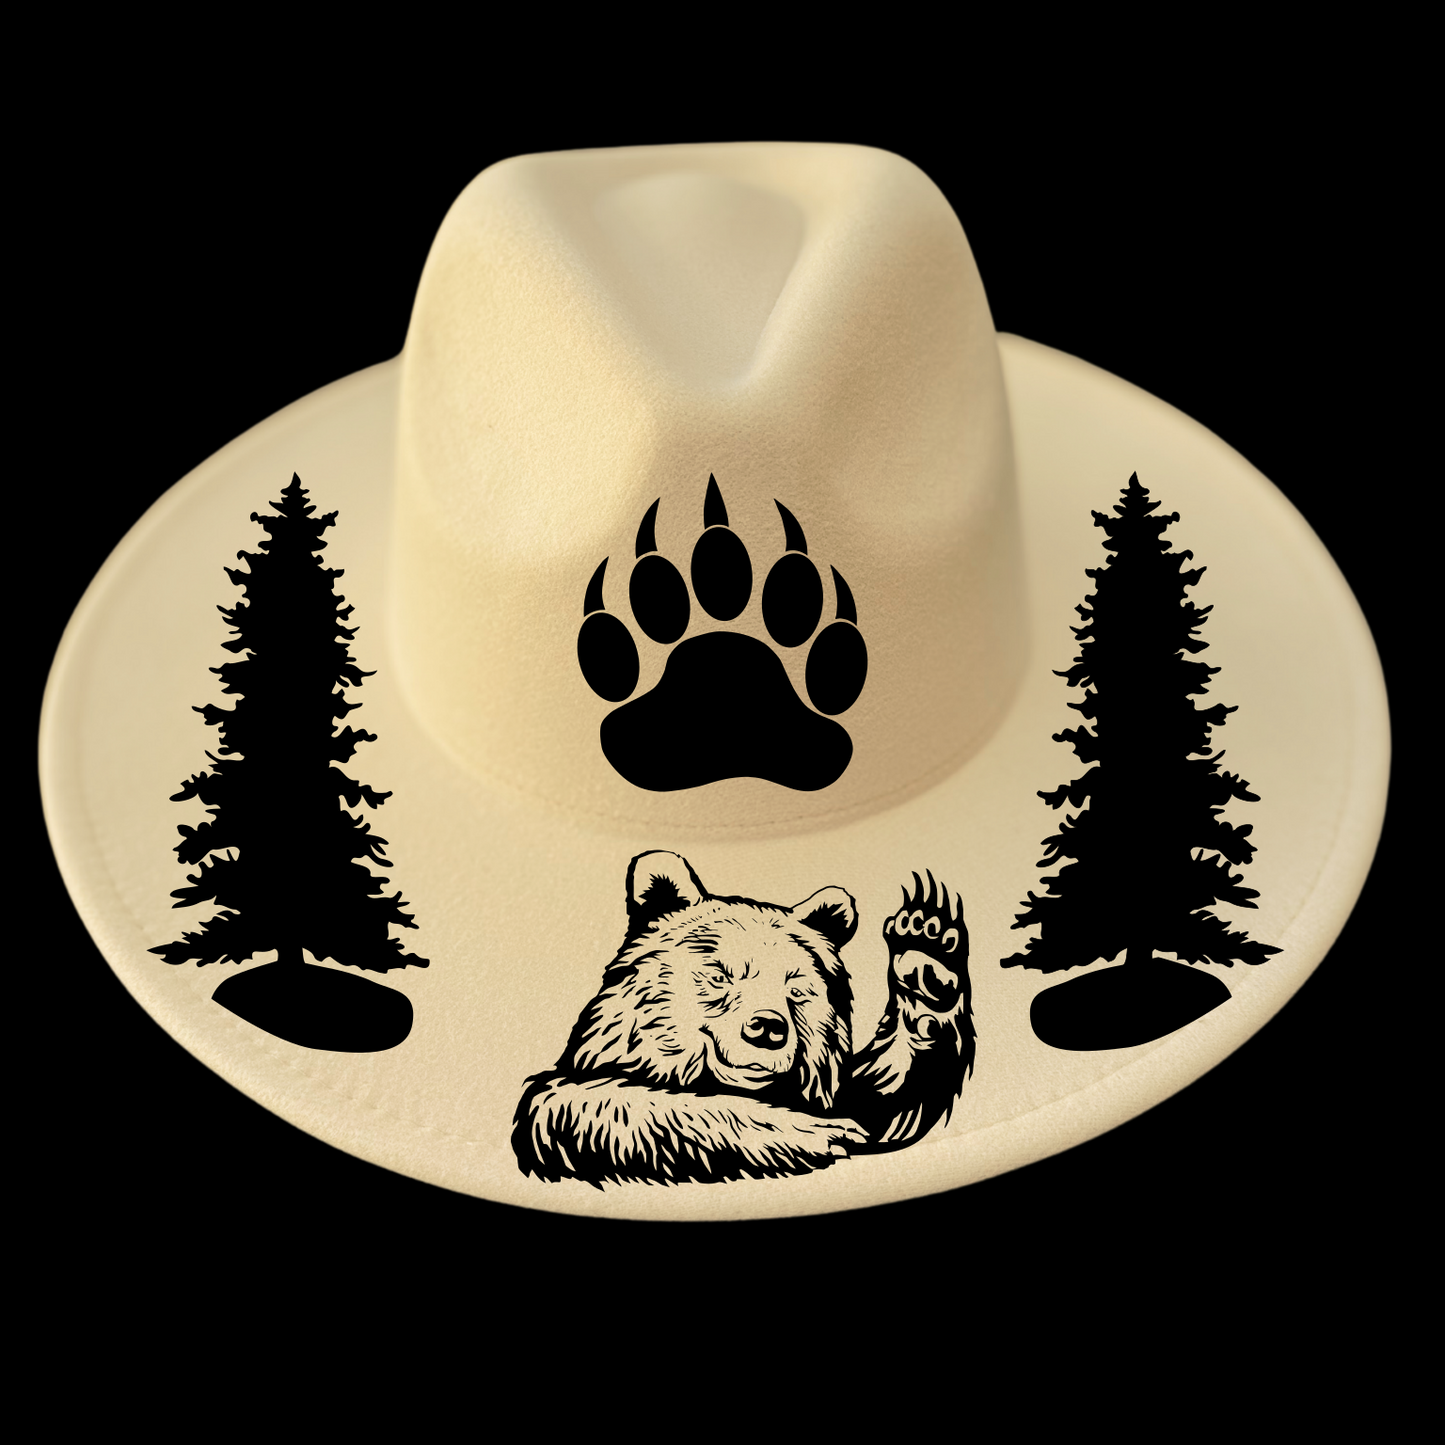 Bear Waving design on a wide brim hat